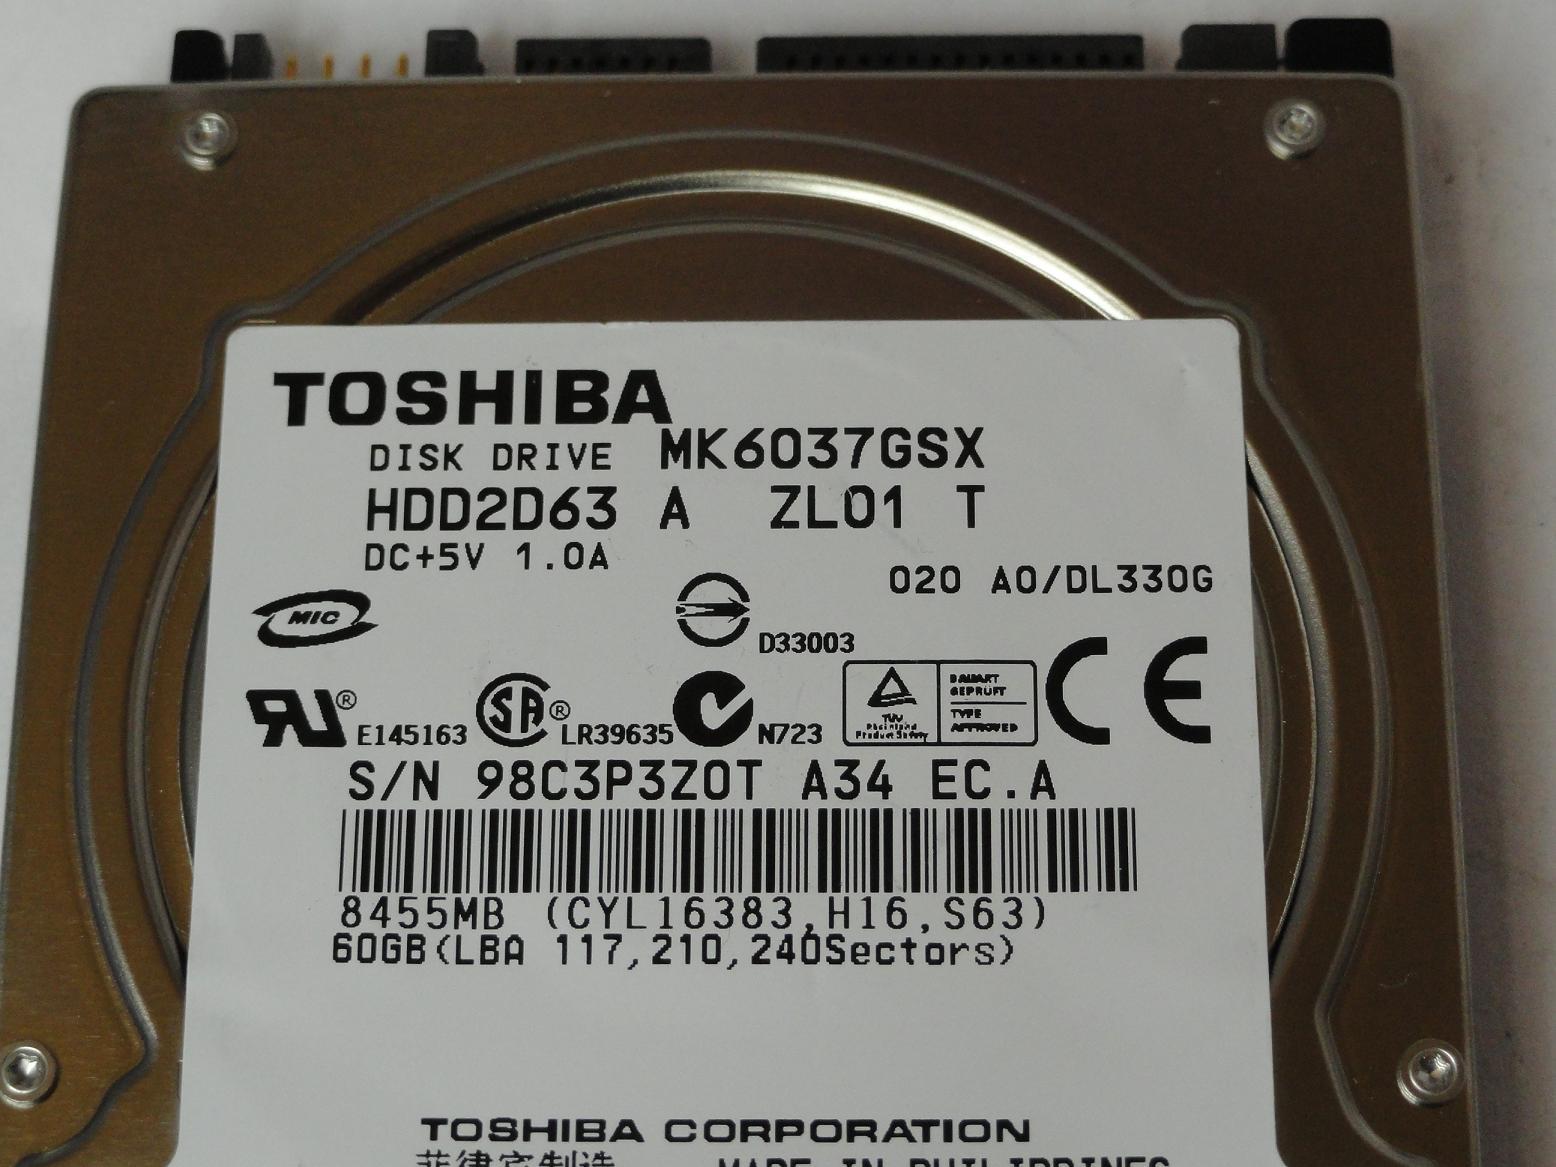 PR00177_HDD2D63_Toshiba 60GB SATA 5400rpm 2.5in HDD - Image3